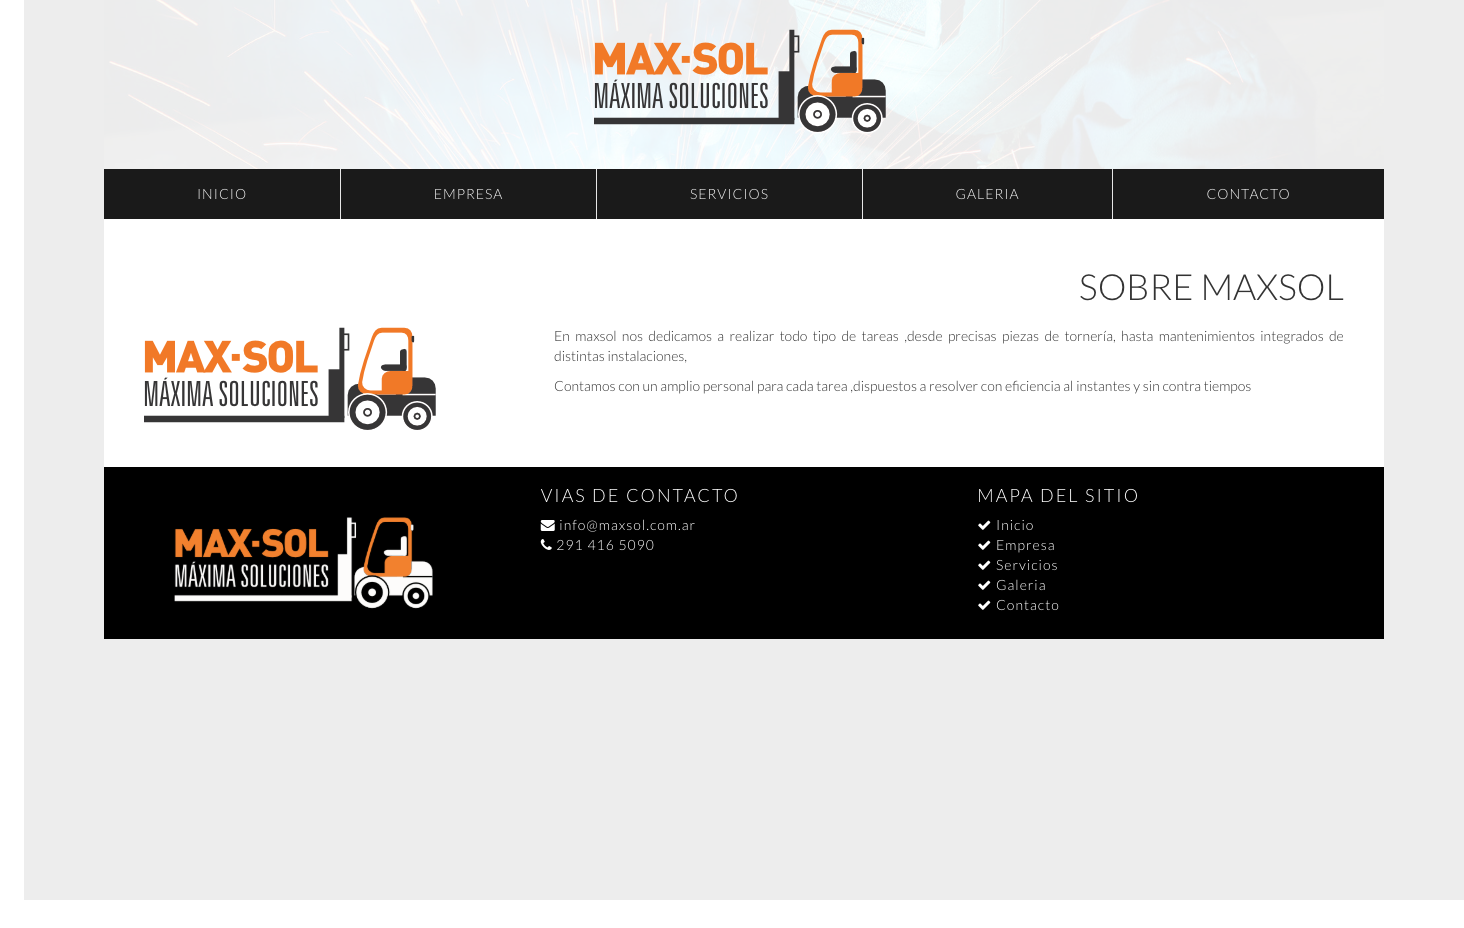 MaxSol